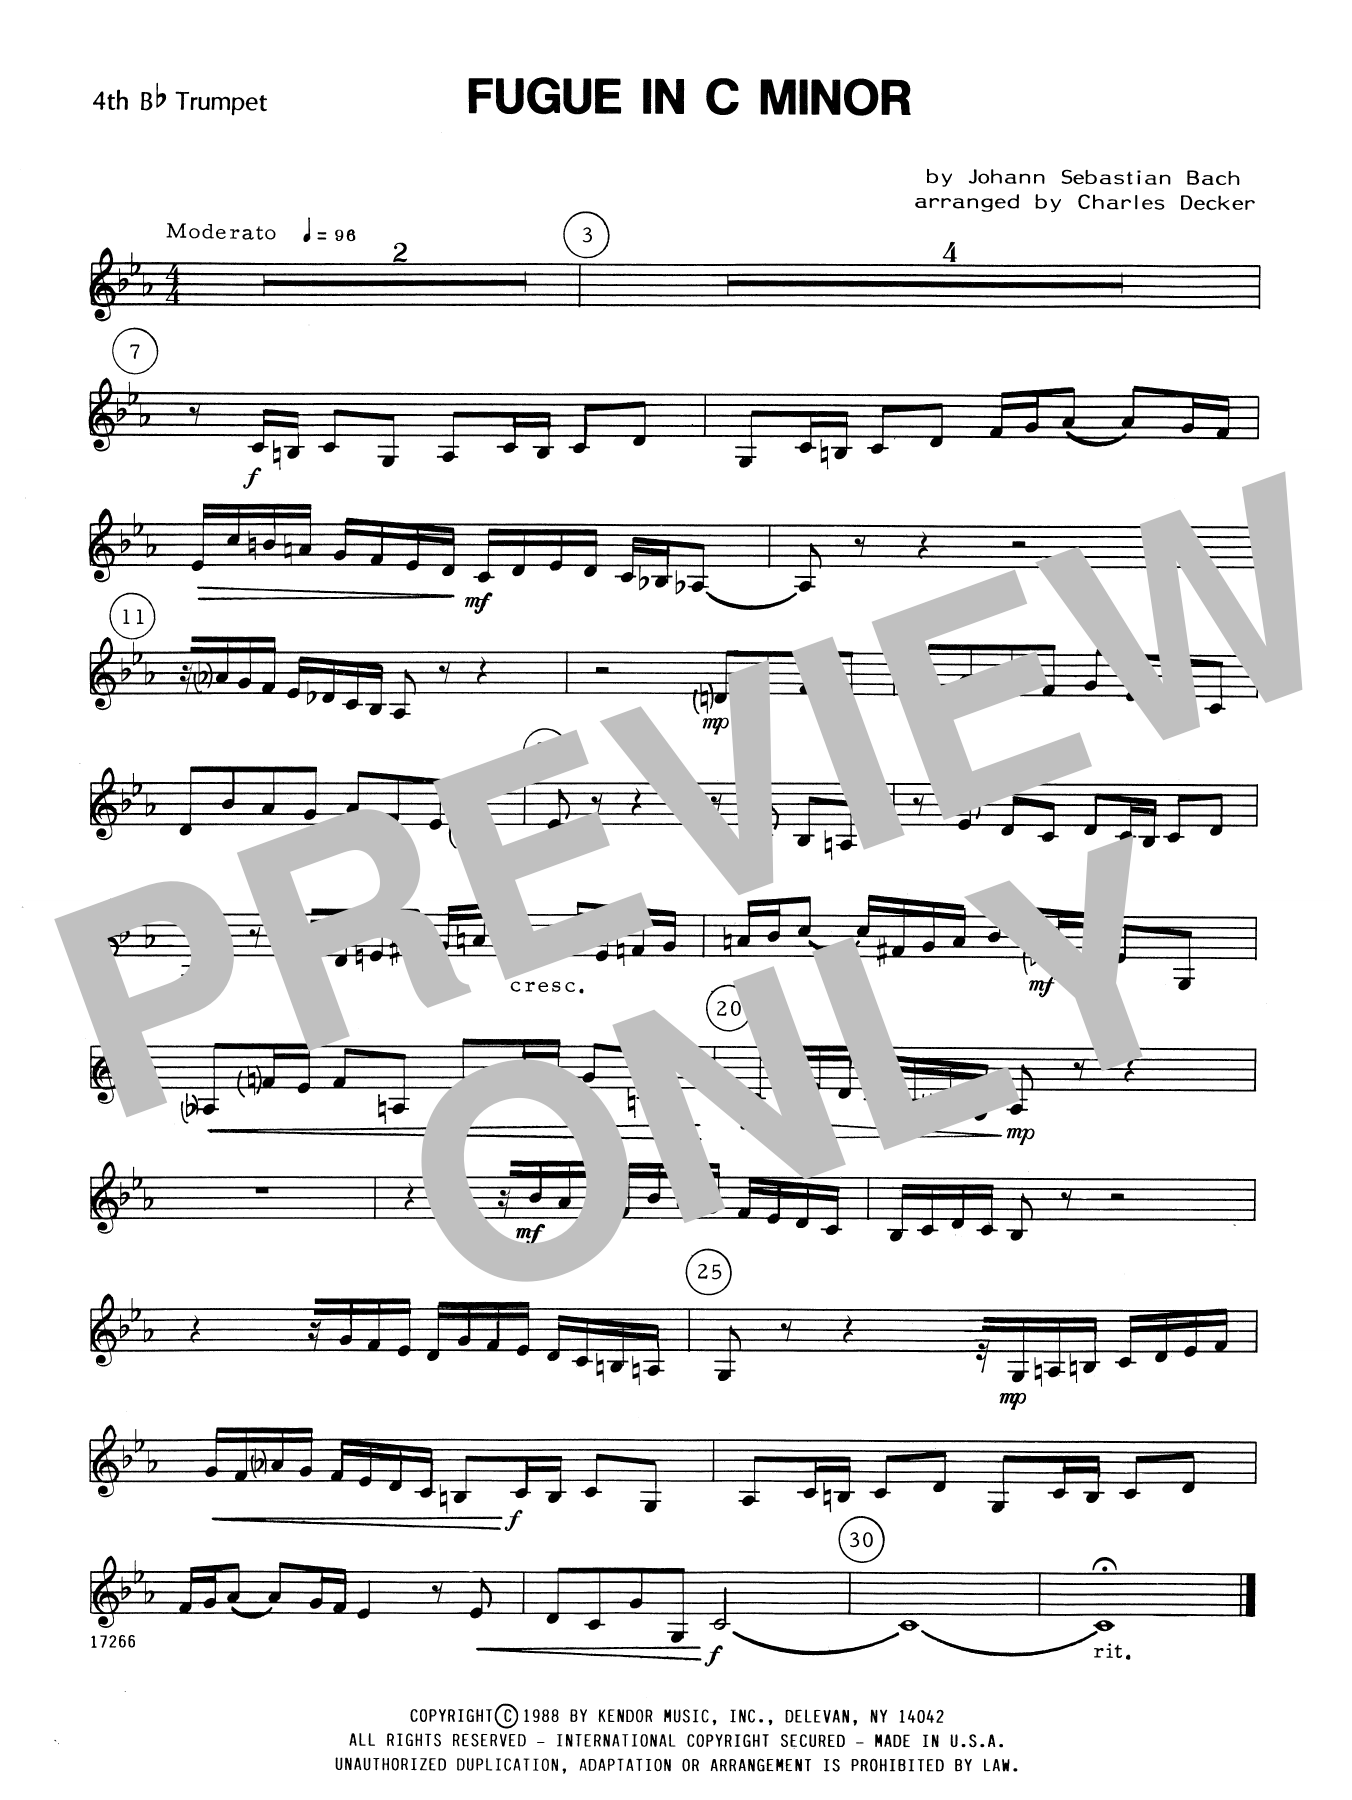 Download Charles Decker Fugue In C Minor - 4th Bb Trumpet Sheet Music